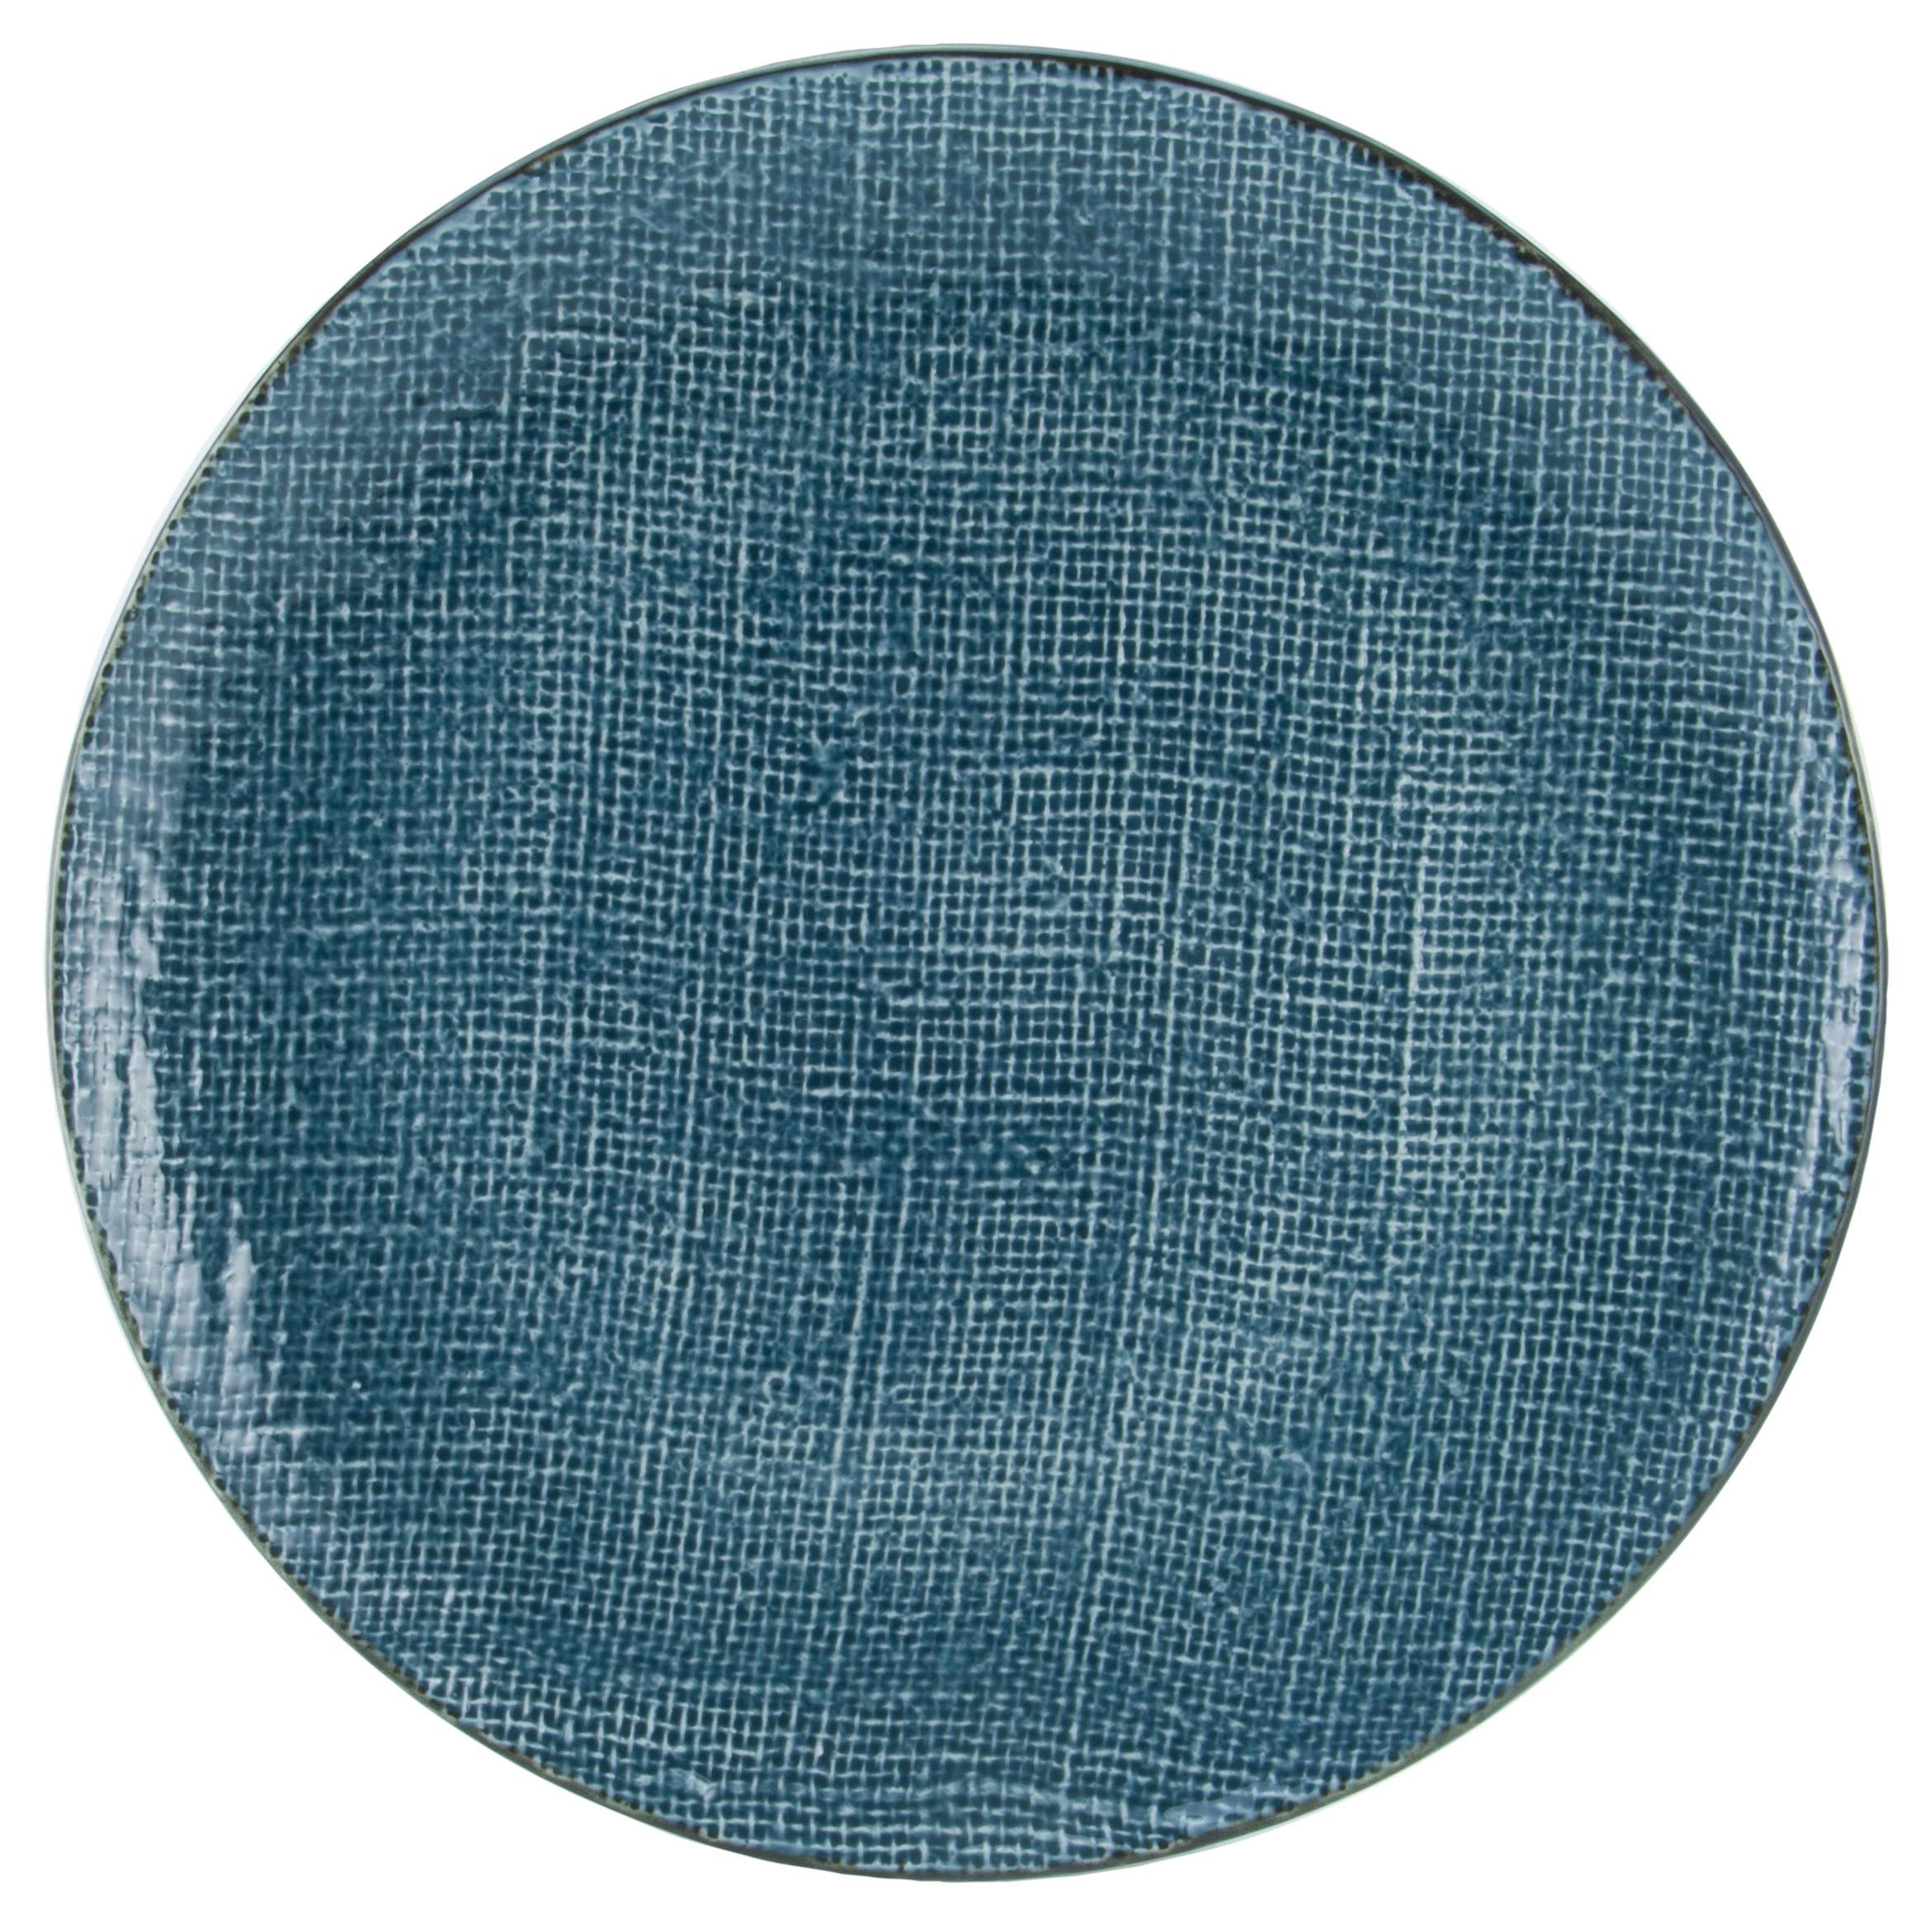 Plytký Tanier Canvas, Ø: 28cm, Modra - modrá, keramika (28/28/3cm) - Premium Living